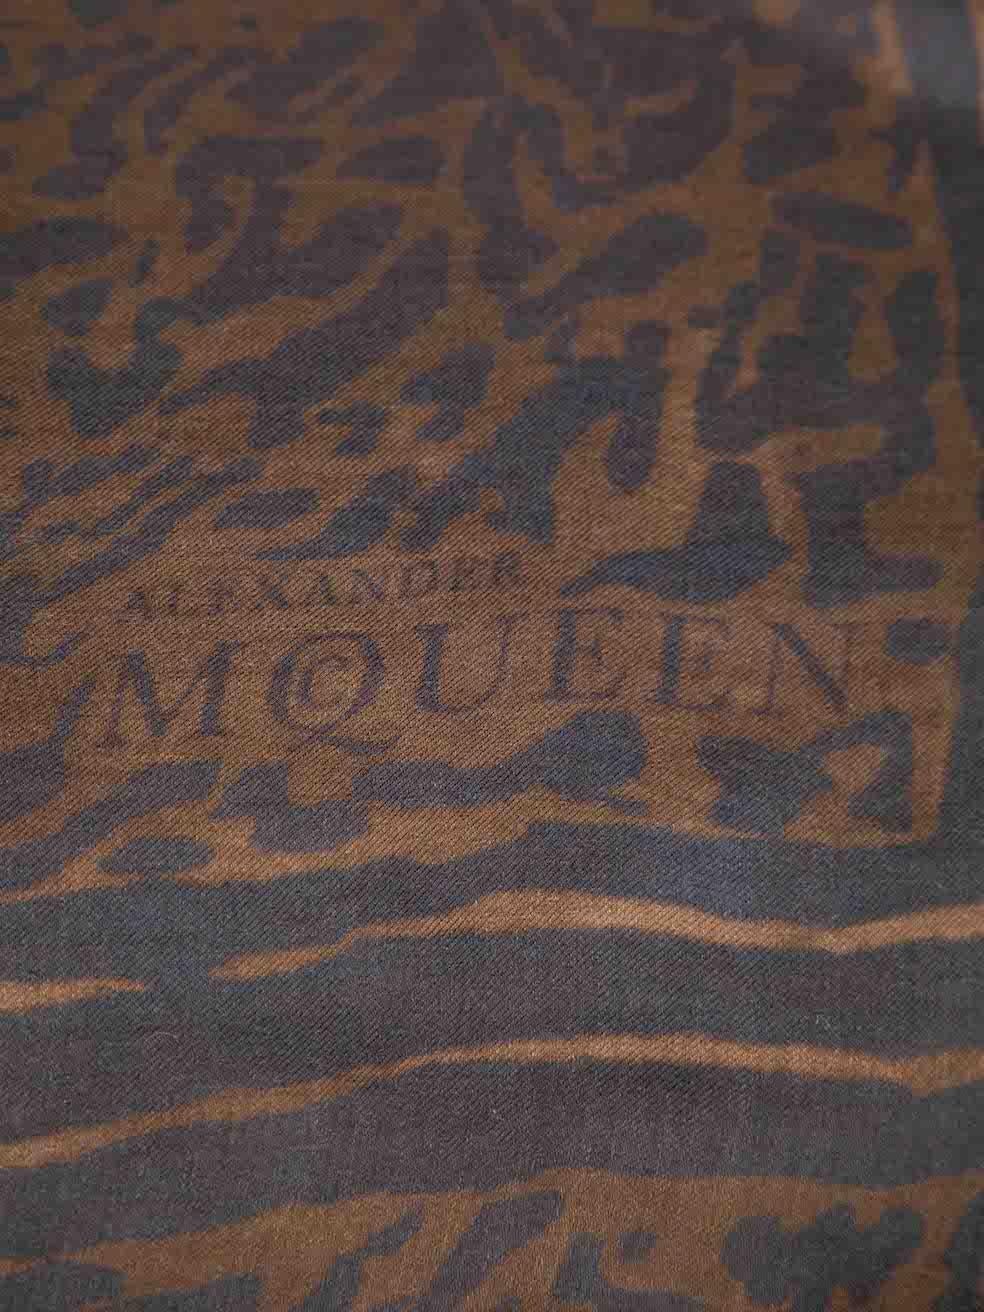 alexander mcqueen leopard print scarf